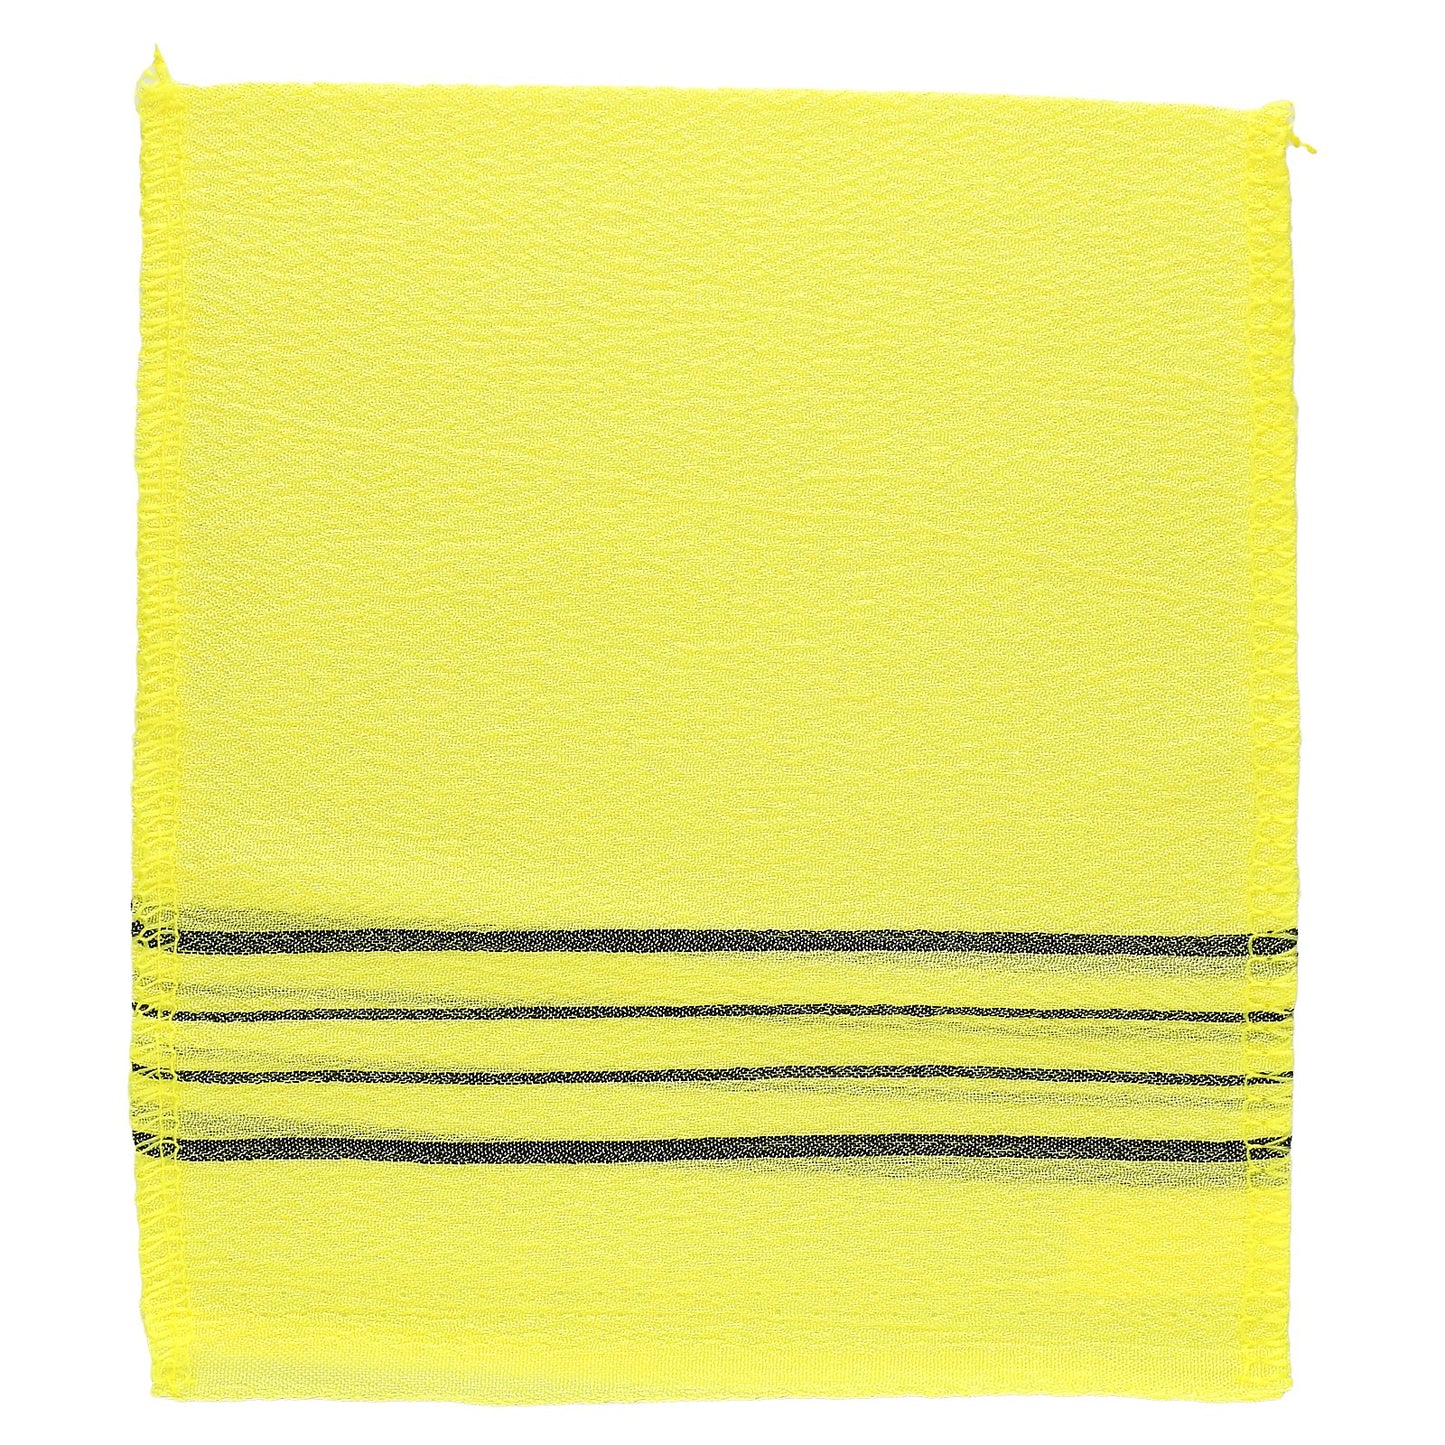 Goldsangsa, Exfoliating Towel, Yellow, 20 Count